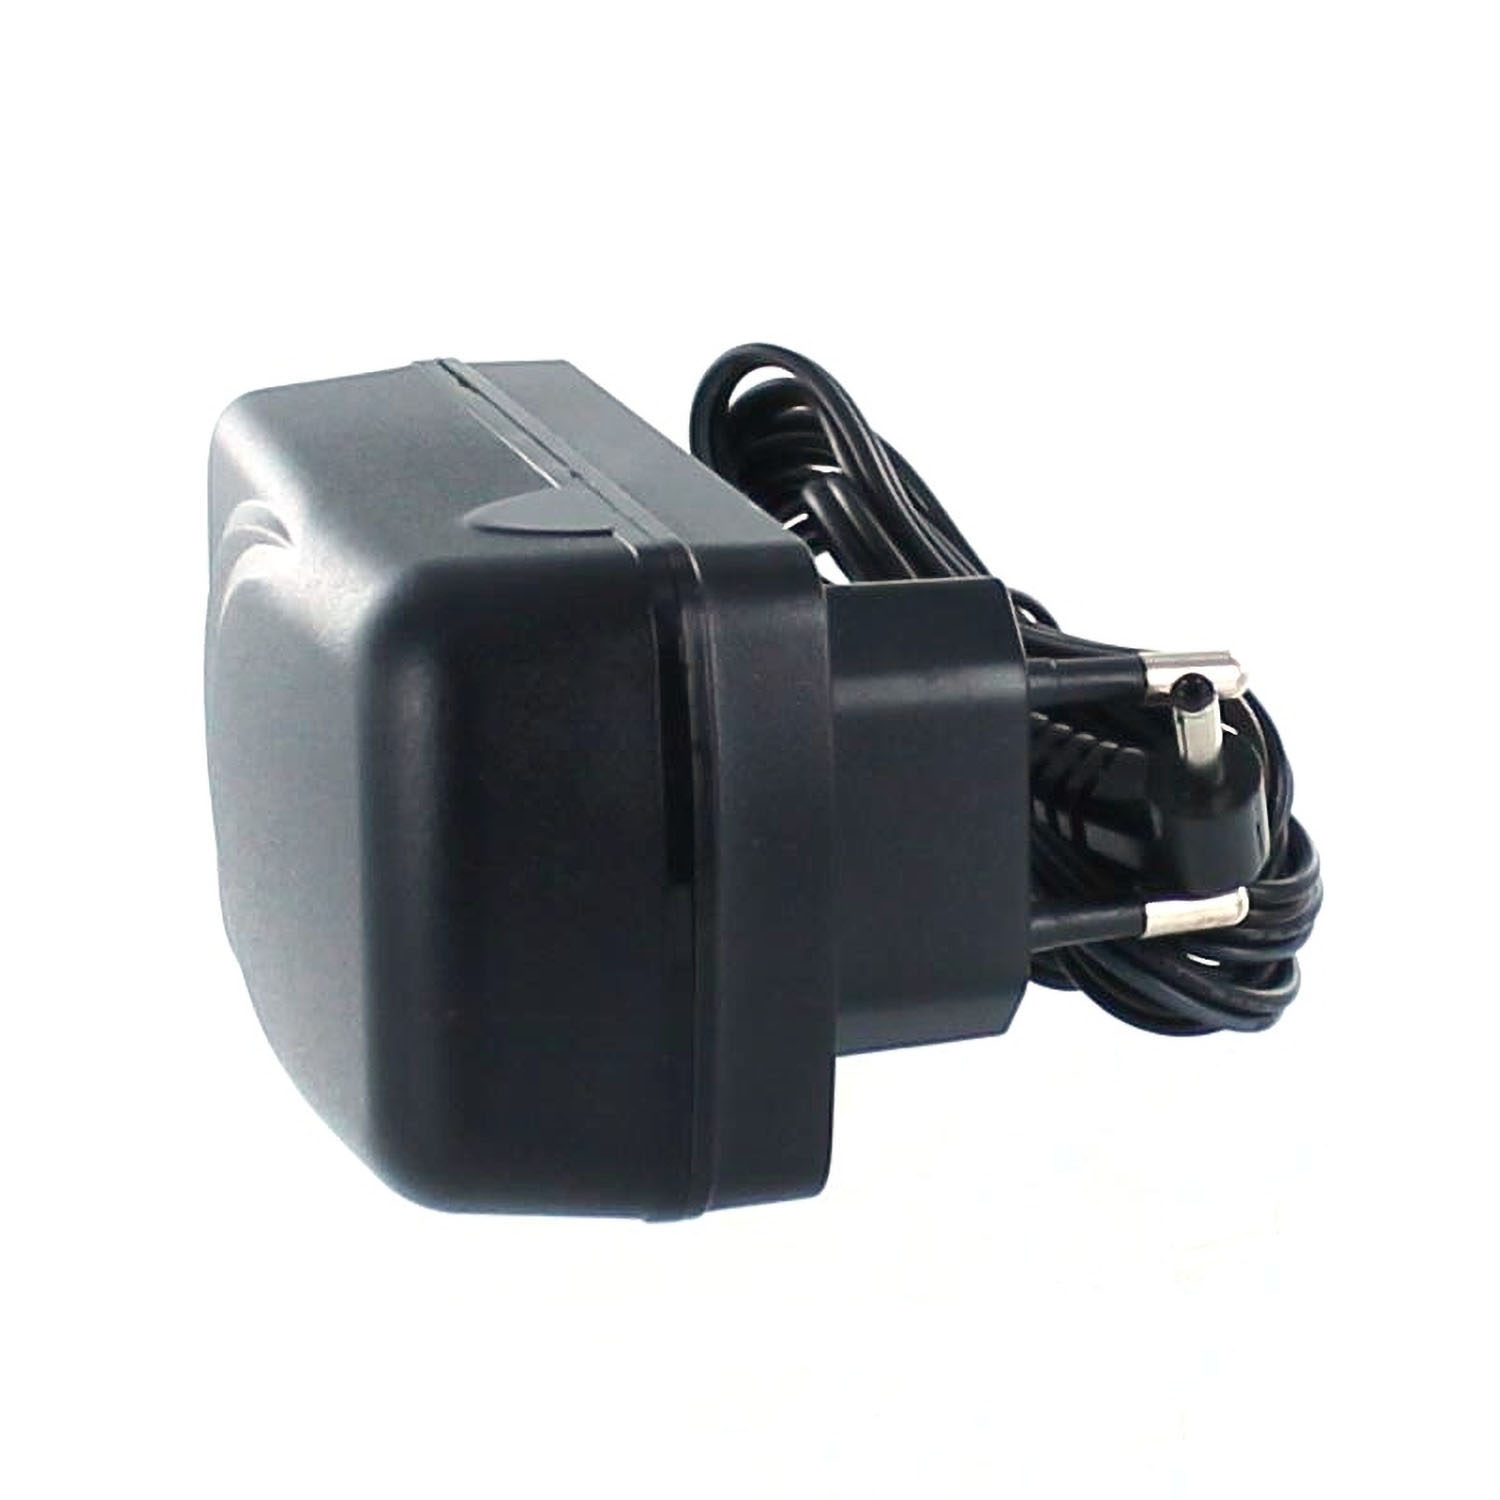 MOBILOTEC Netzteil kompatibel mit Netzteil/Ladegerät 8.4 MV700 Canon Canon, Volt, schwarz